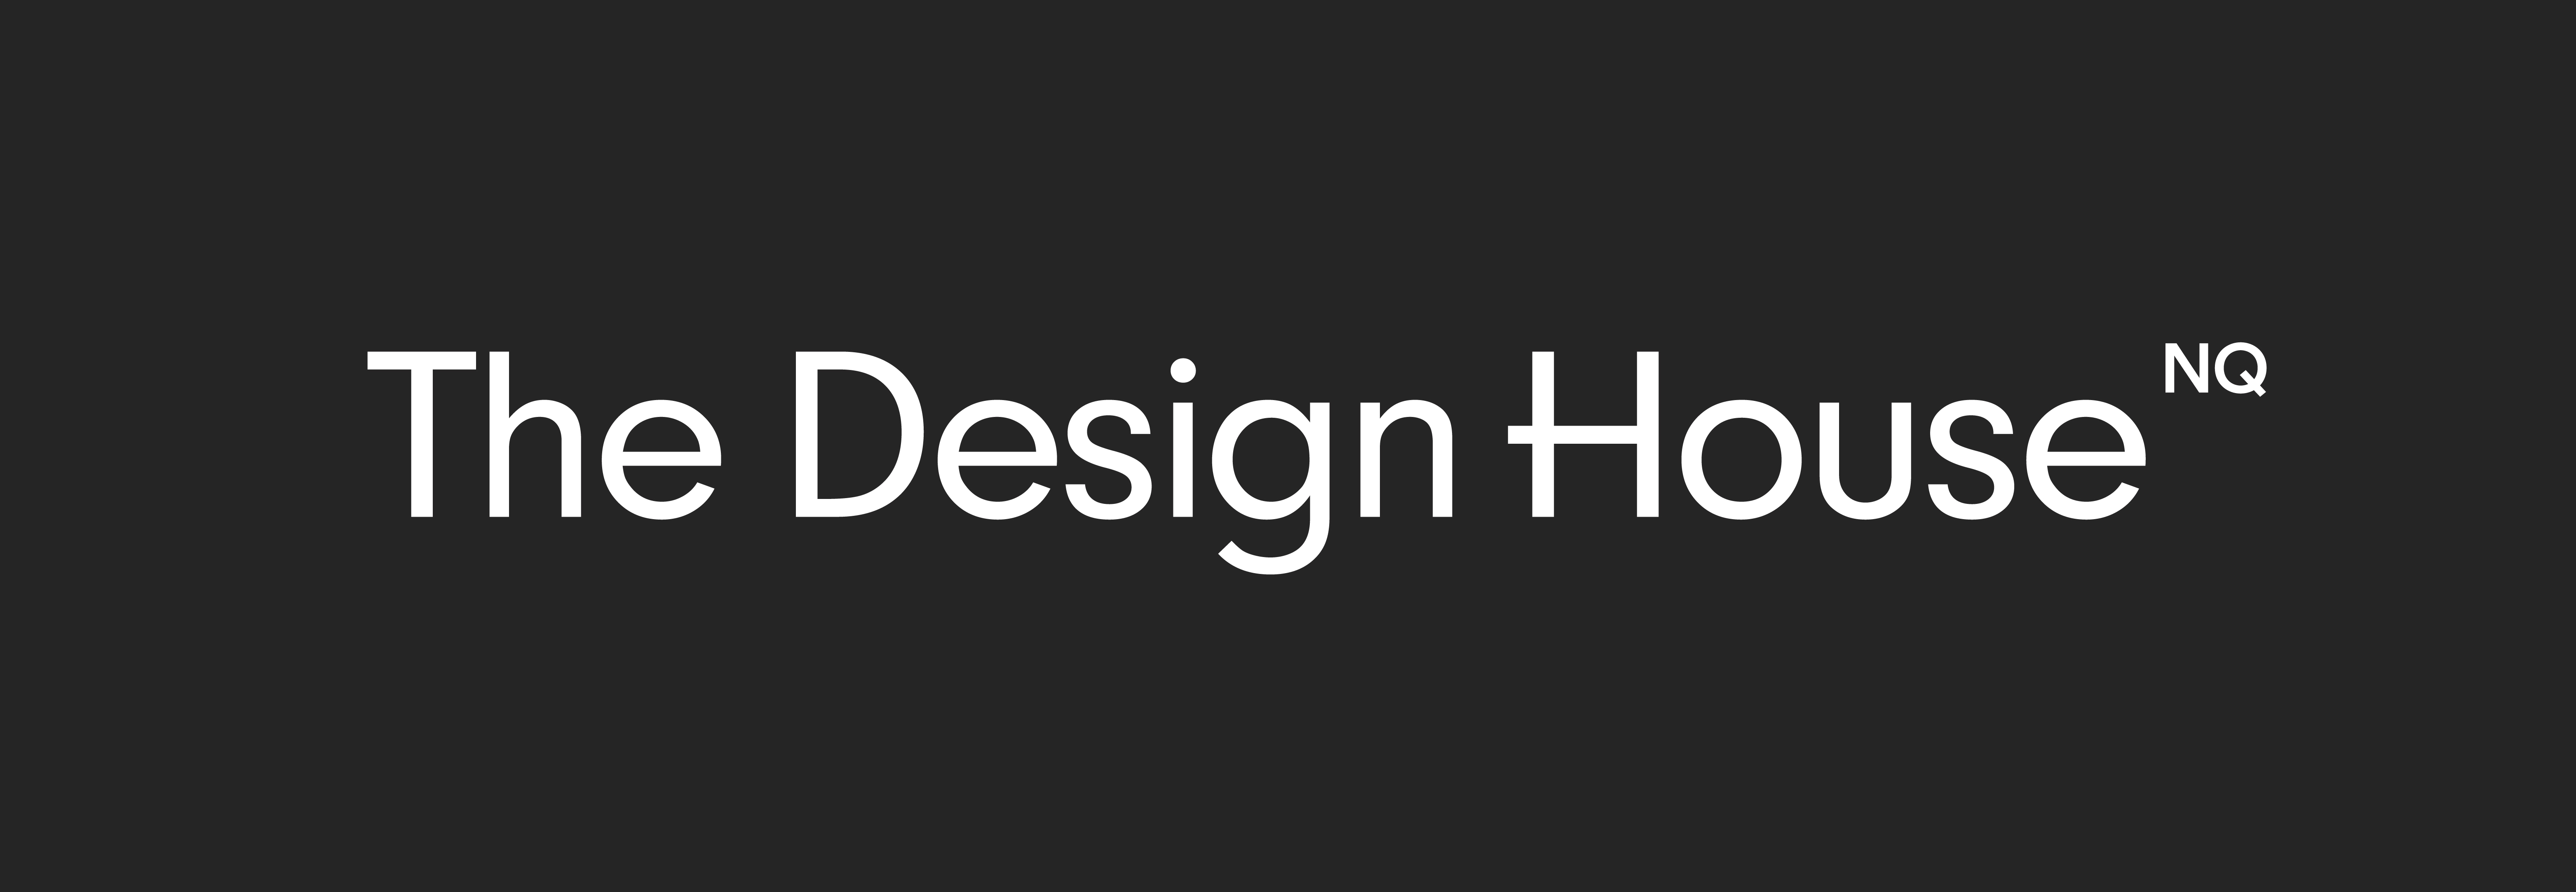 the-design-house-nq-pty-ltd